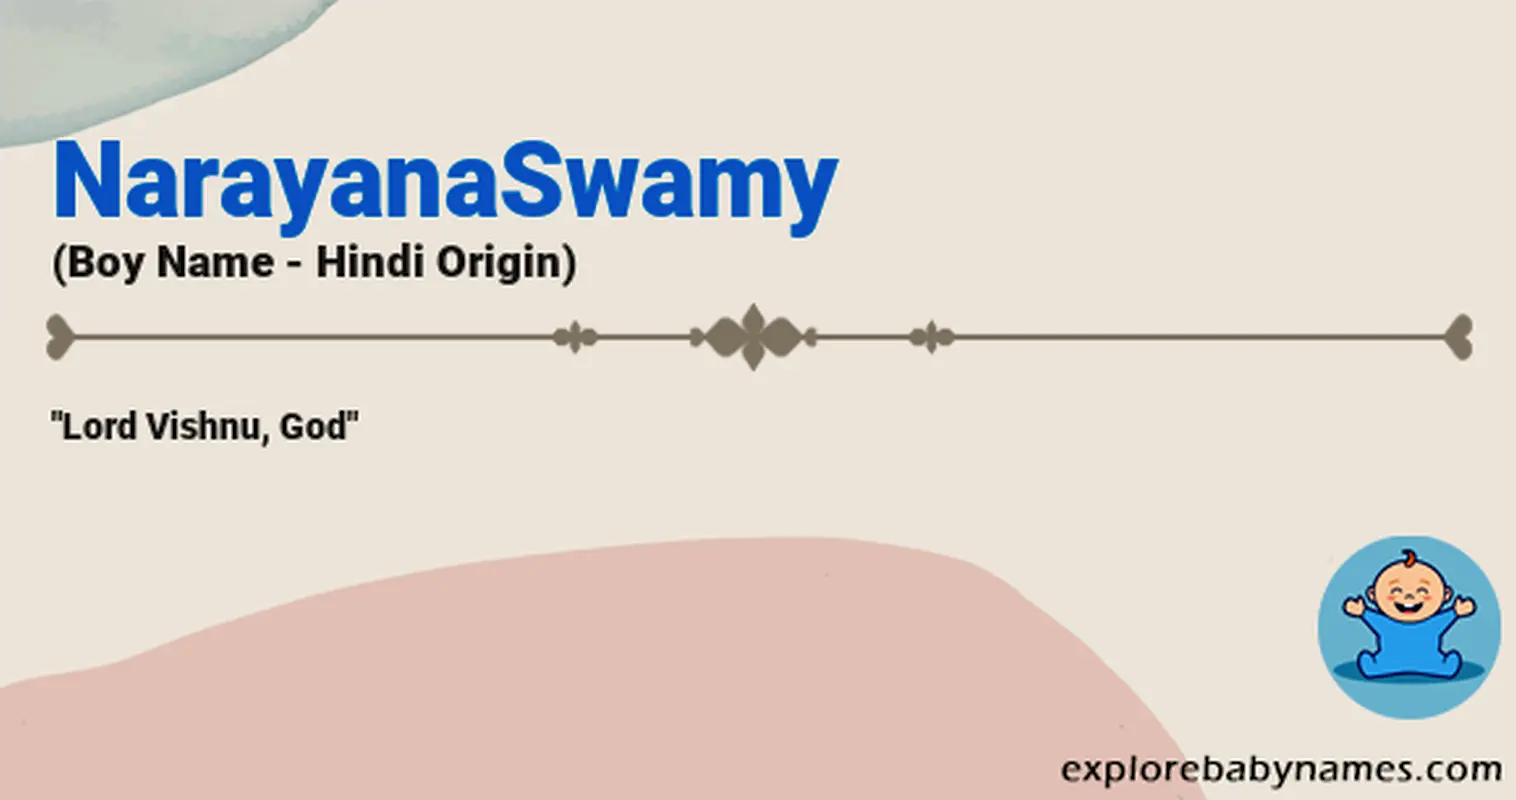 Meaning of NarayanaSwamy